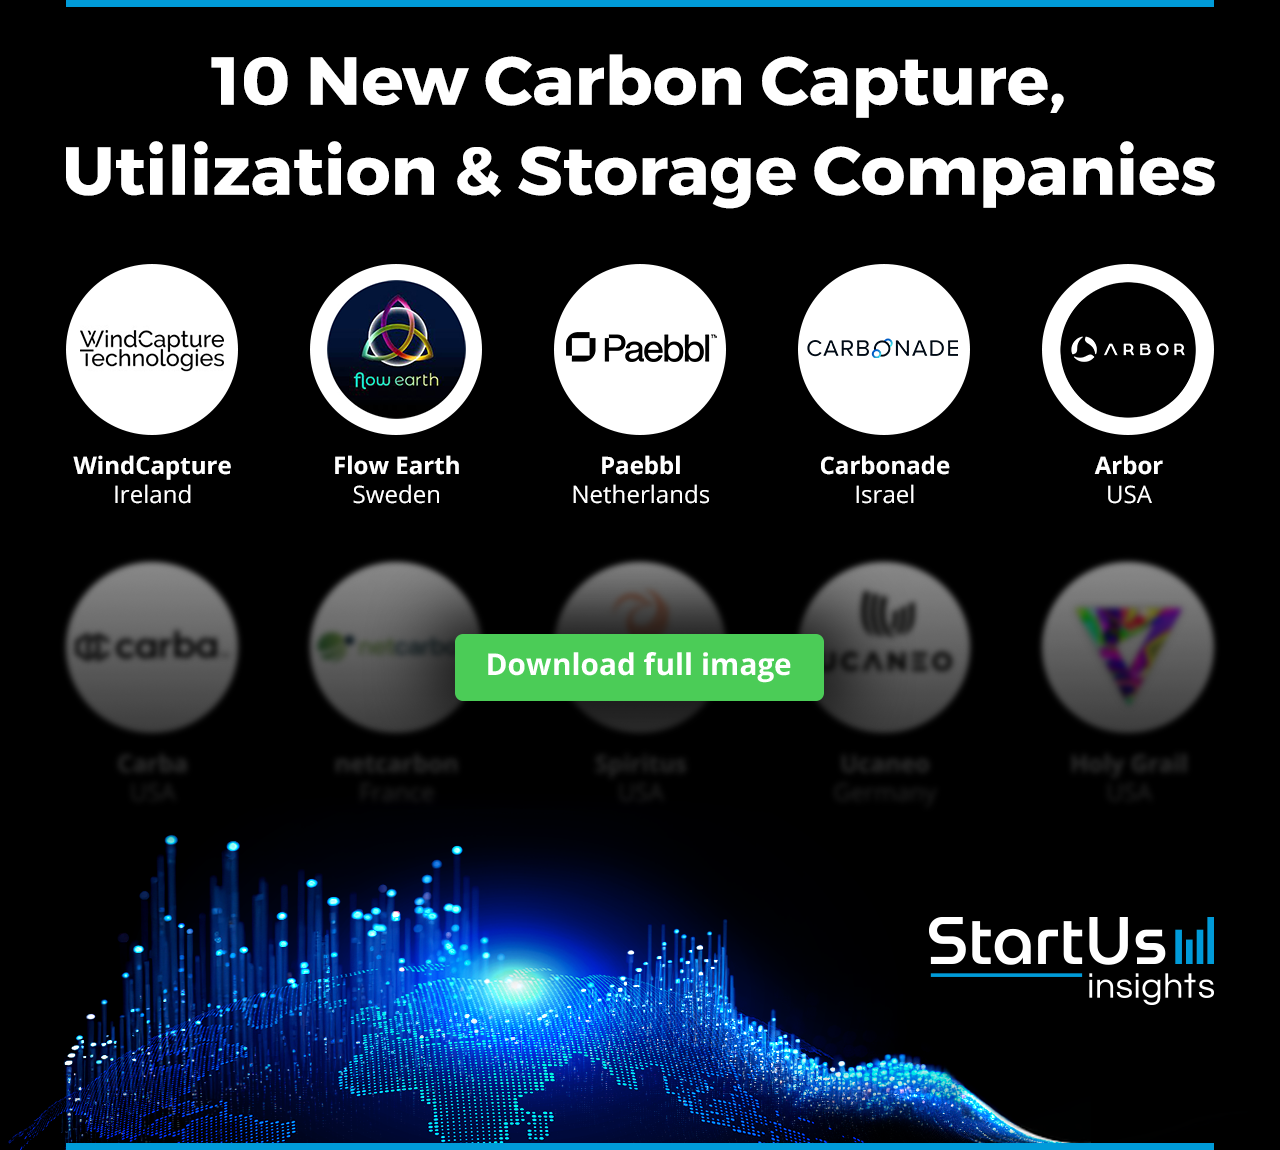 New-Carbon-Capture-Storage&Utilization-Companies-Logos-Blurred-StartUs-Insights-noresize